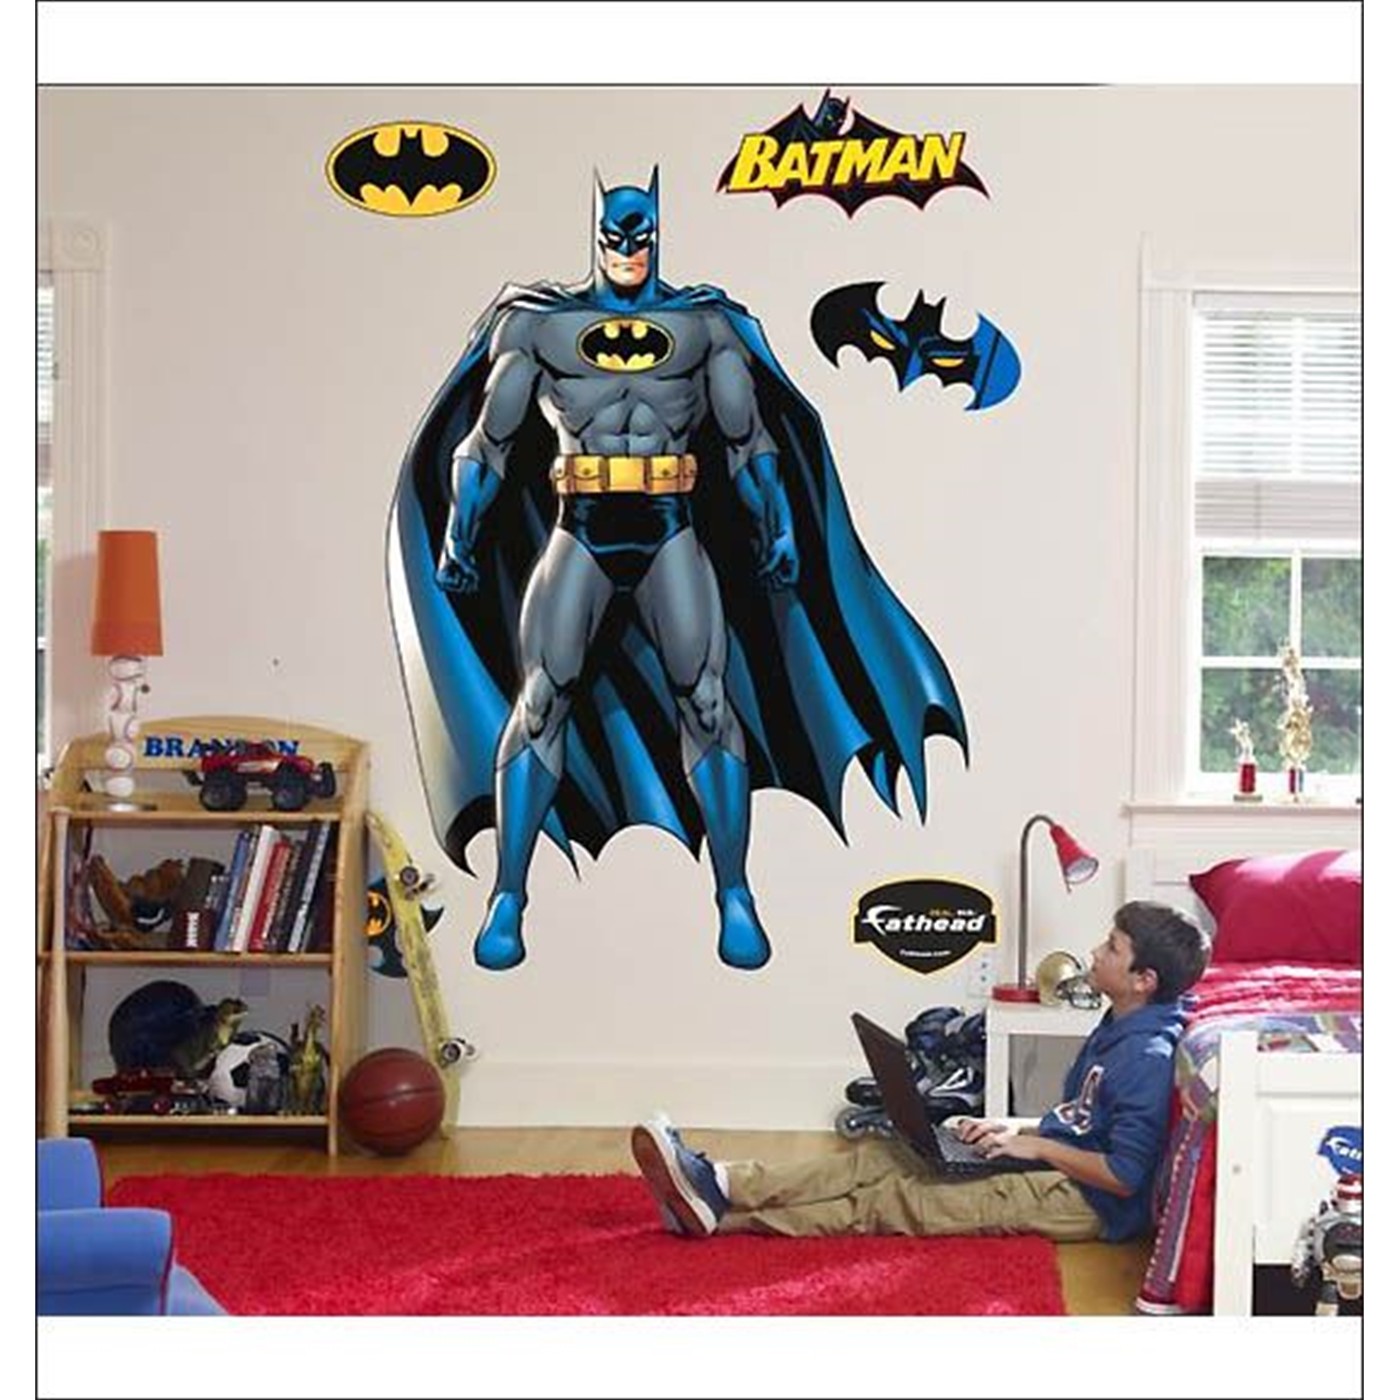 Batman Image Life Size Wall Decal